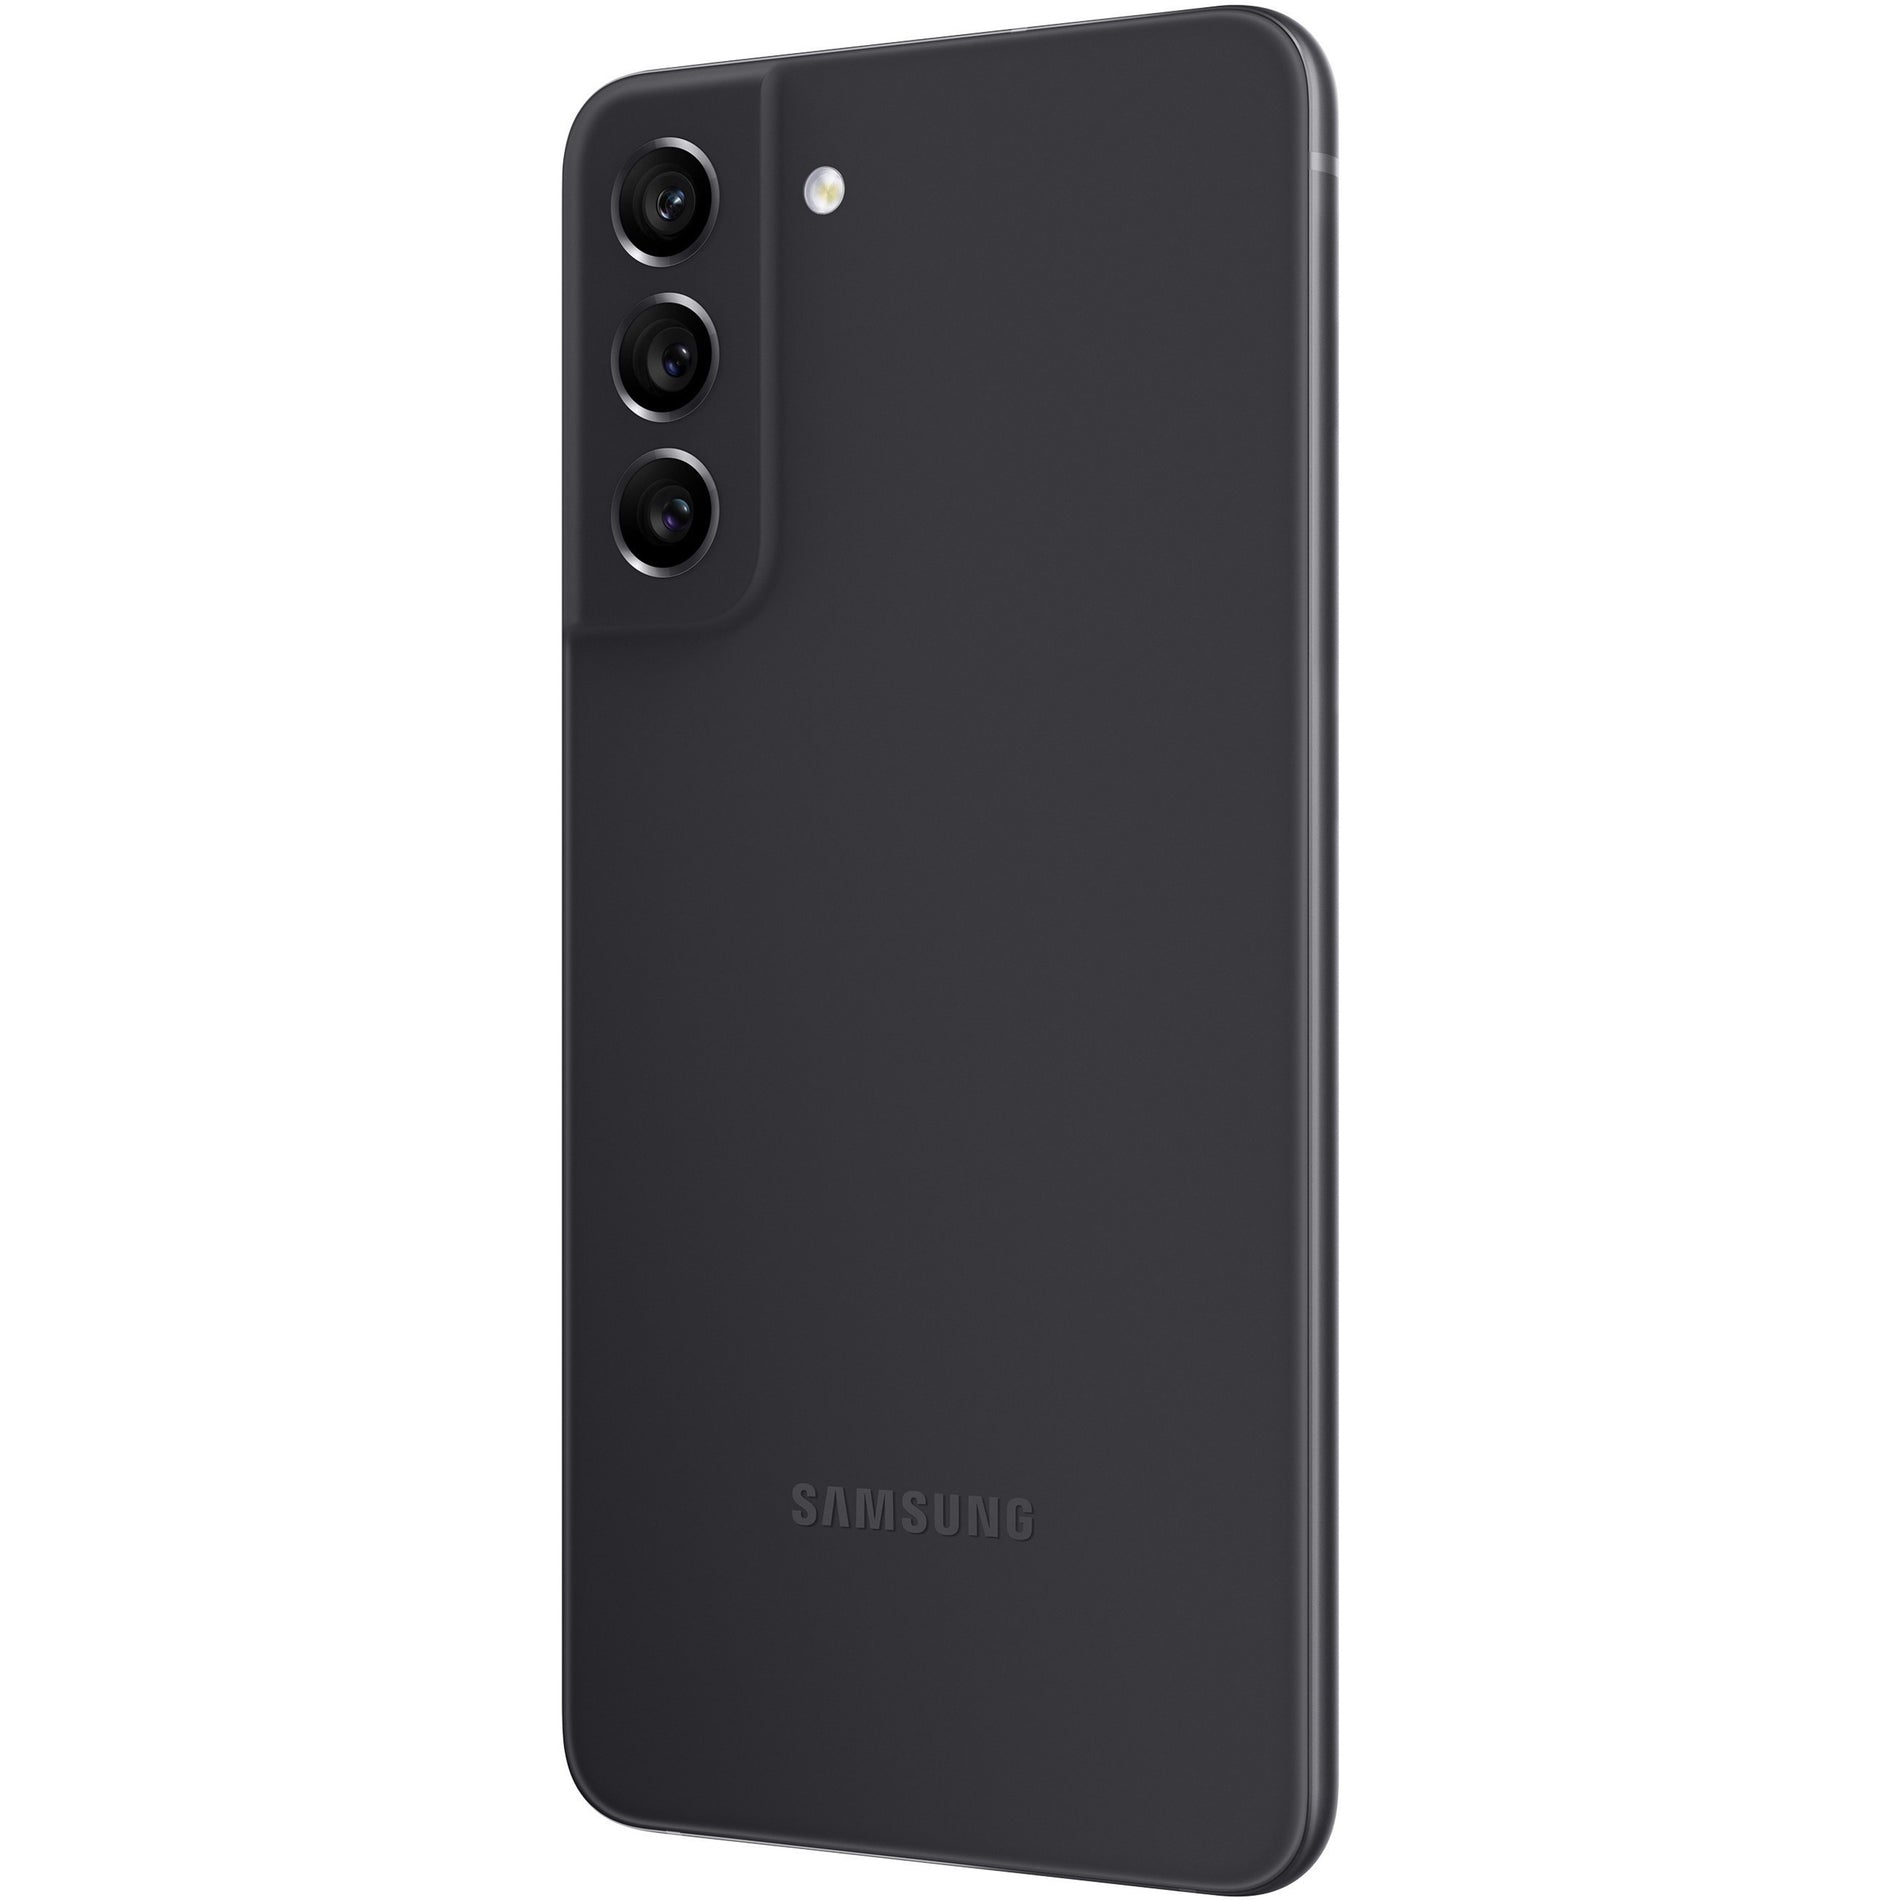 Samsung SM-G990UZAFXAA Galaxy S21 FE 5G Smartphone, Graphite, 128GB Unlocked